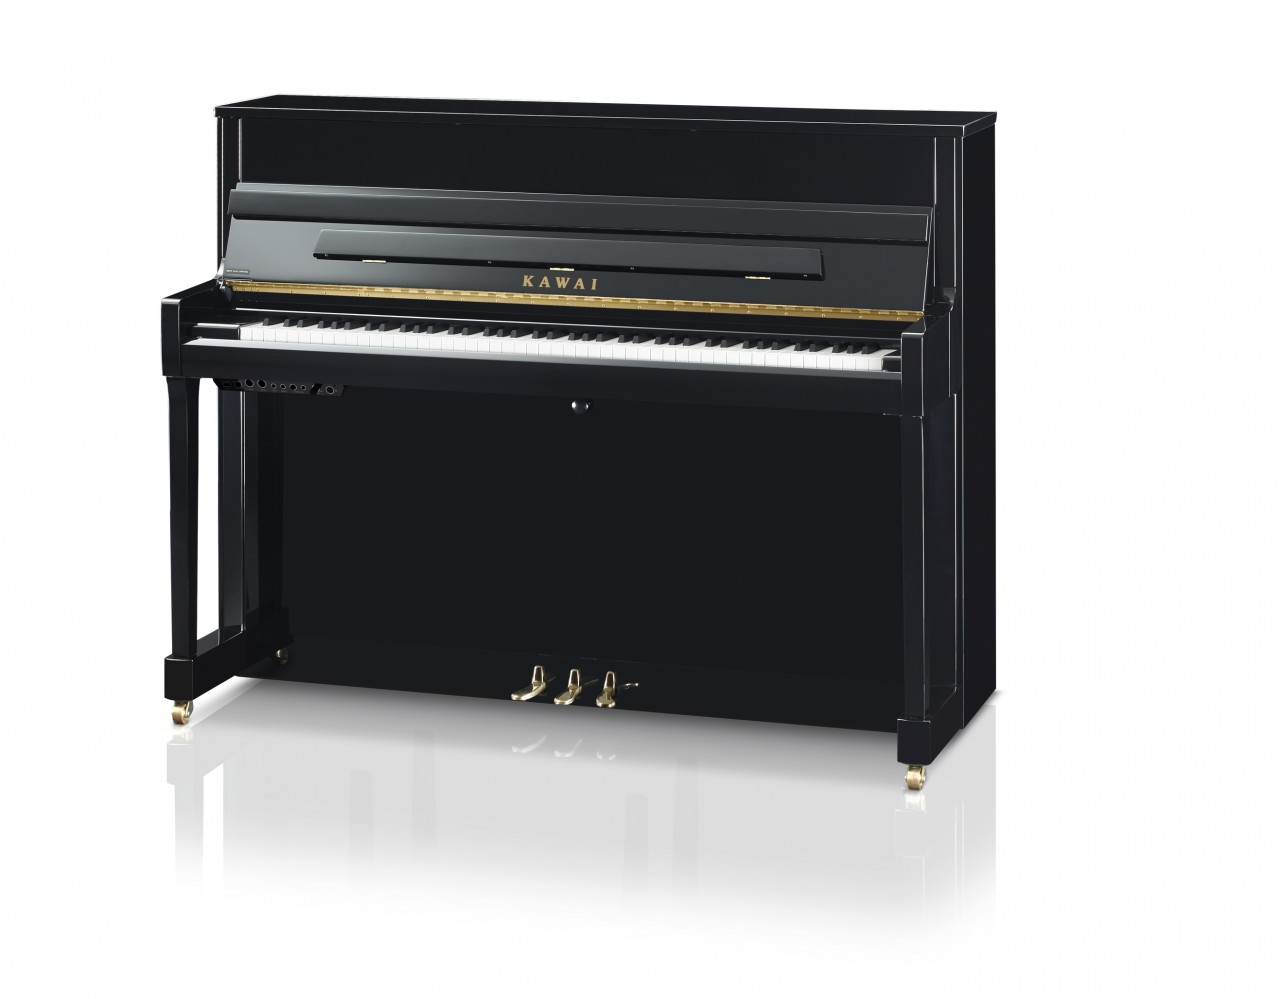 Kawai Klavier K 200 E/P ATX-4 Schwarz Hochglanz